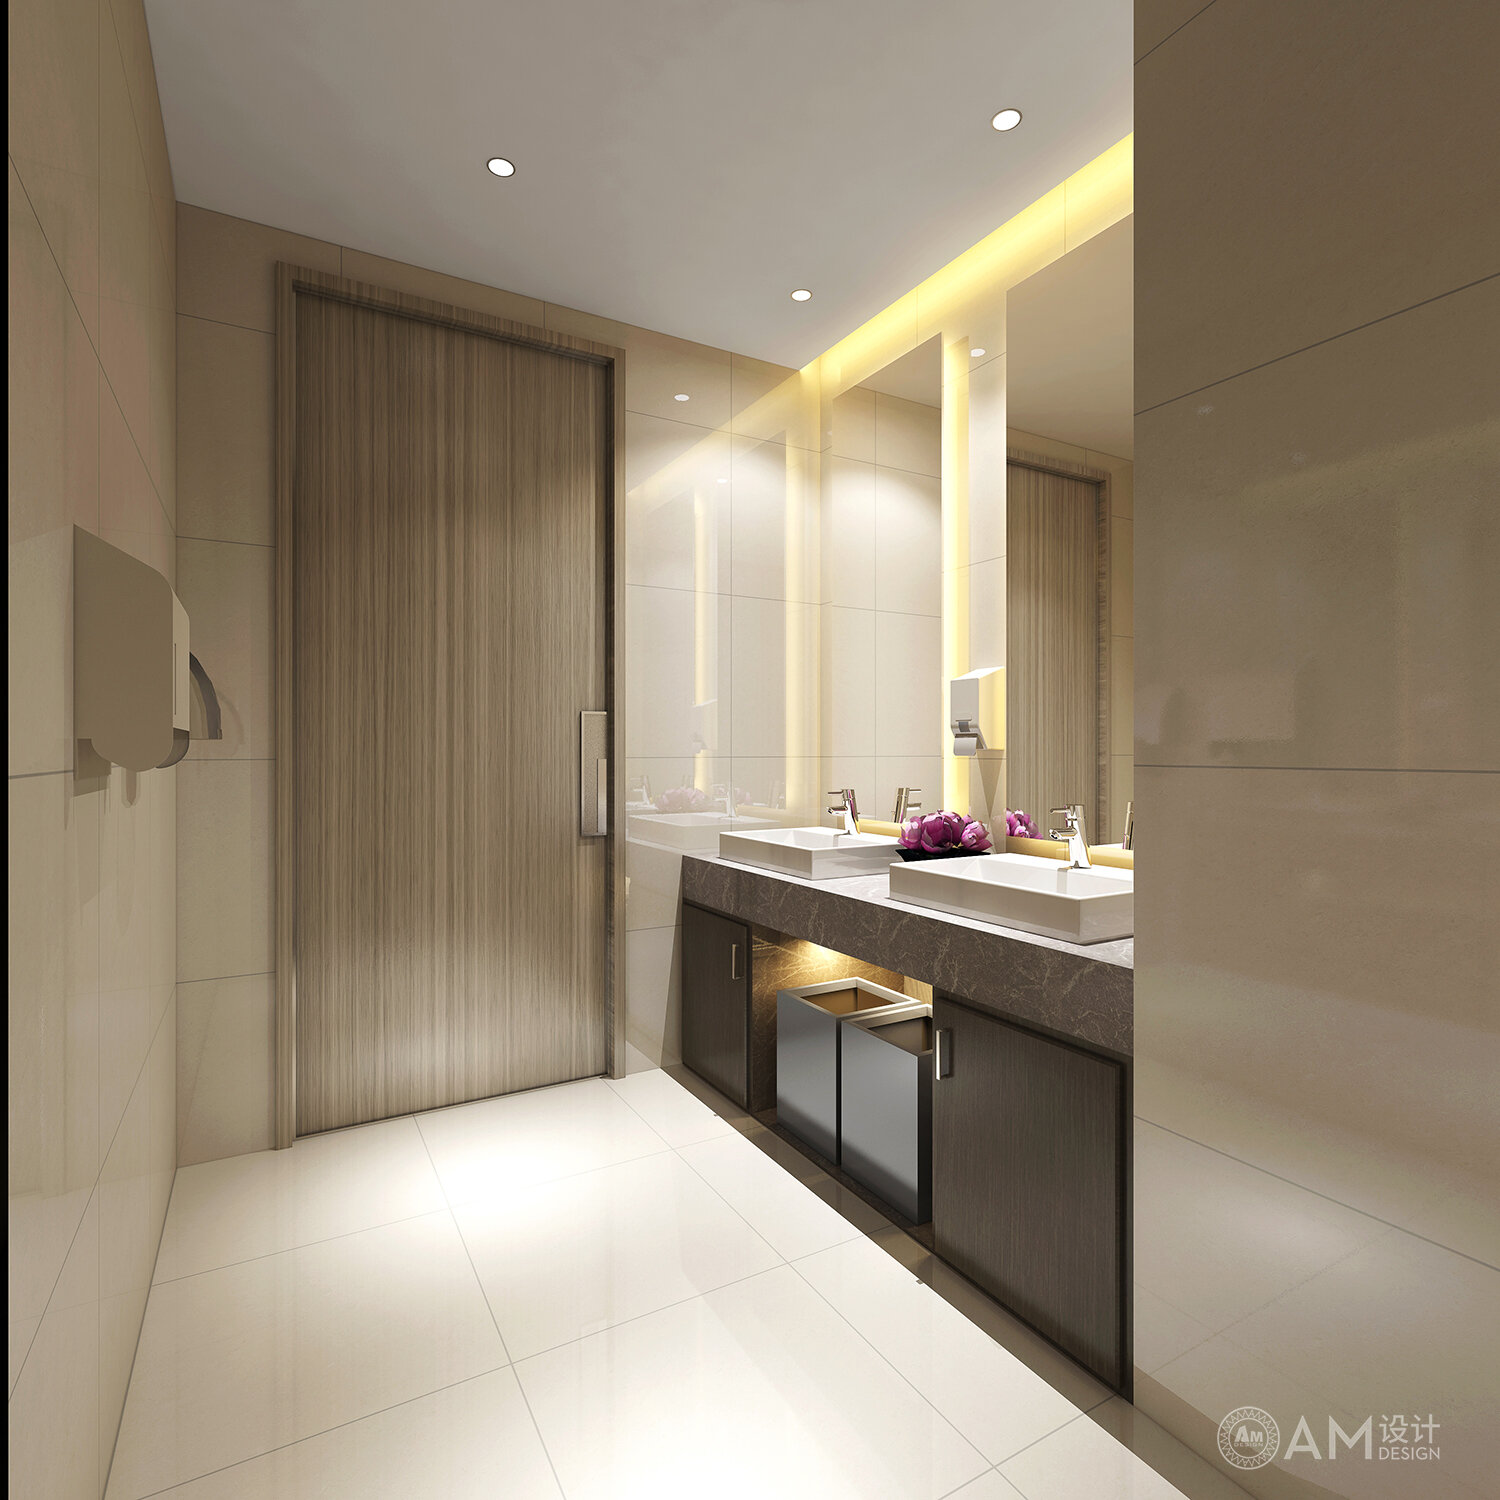 AM | Toilet design for headquarters of AlSi Refrigeration Technology Co., Ltd